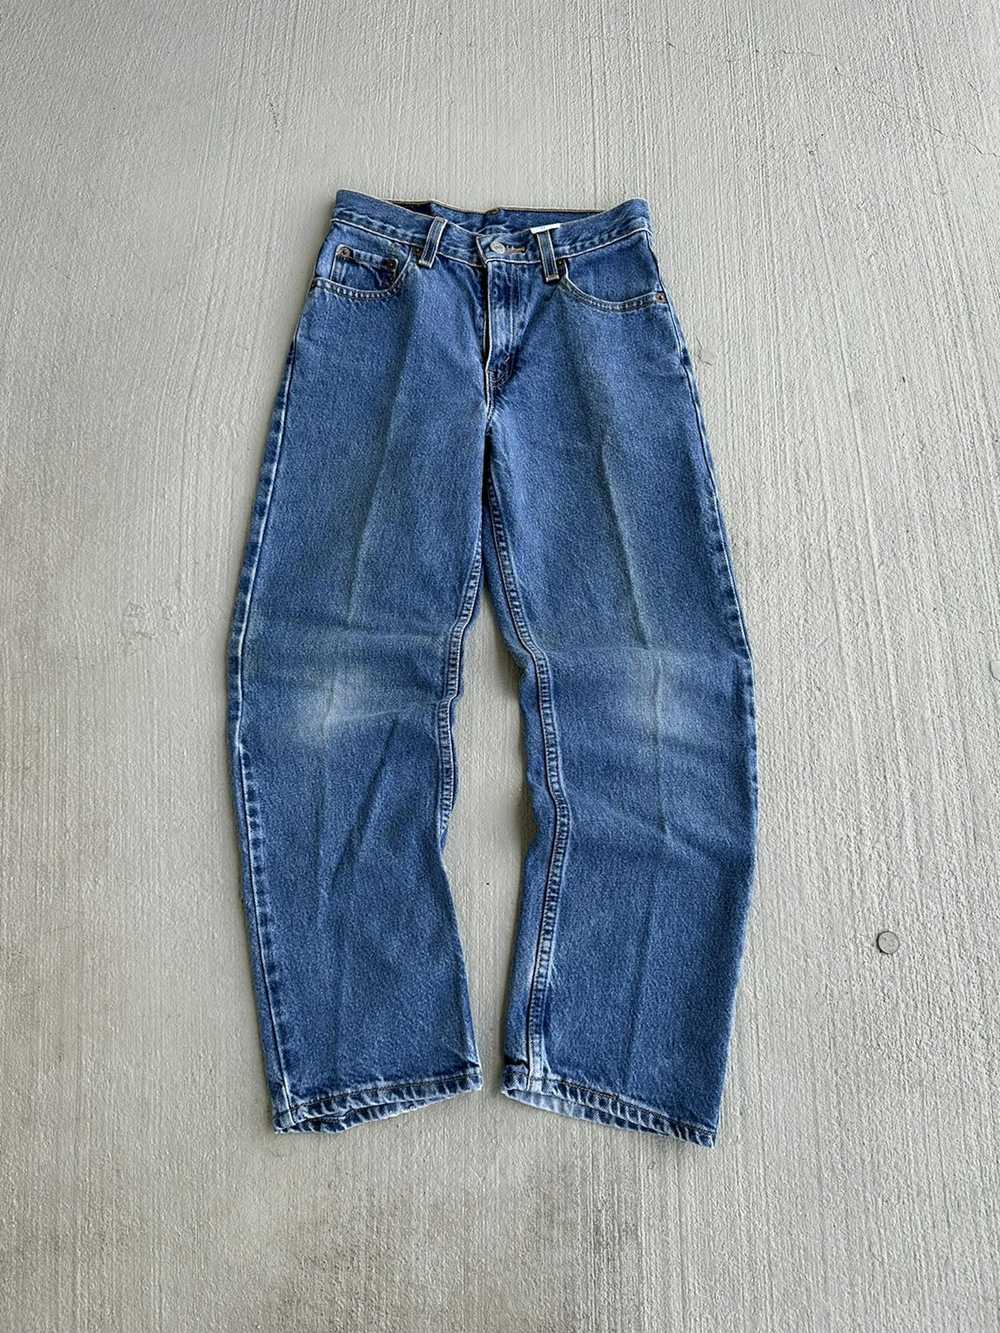 Levi's × Streetwear × Vintage Vintage Levi’s Jeans - image 2